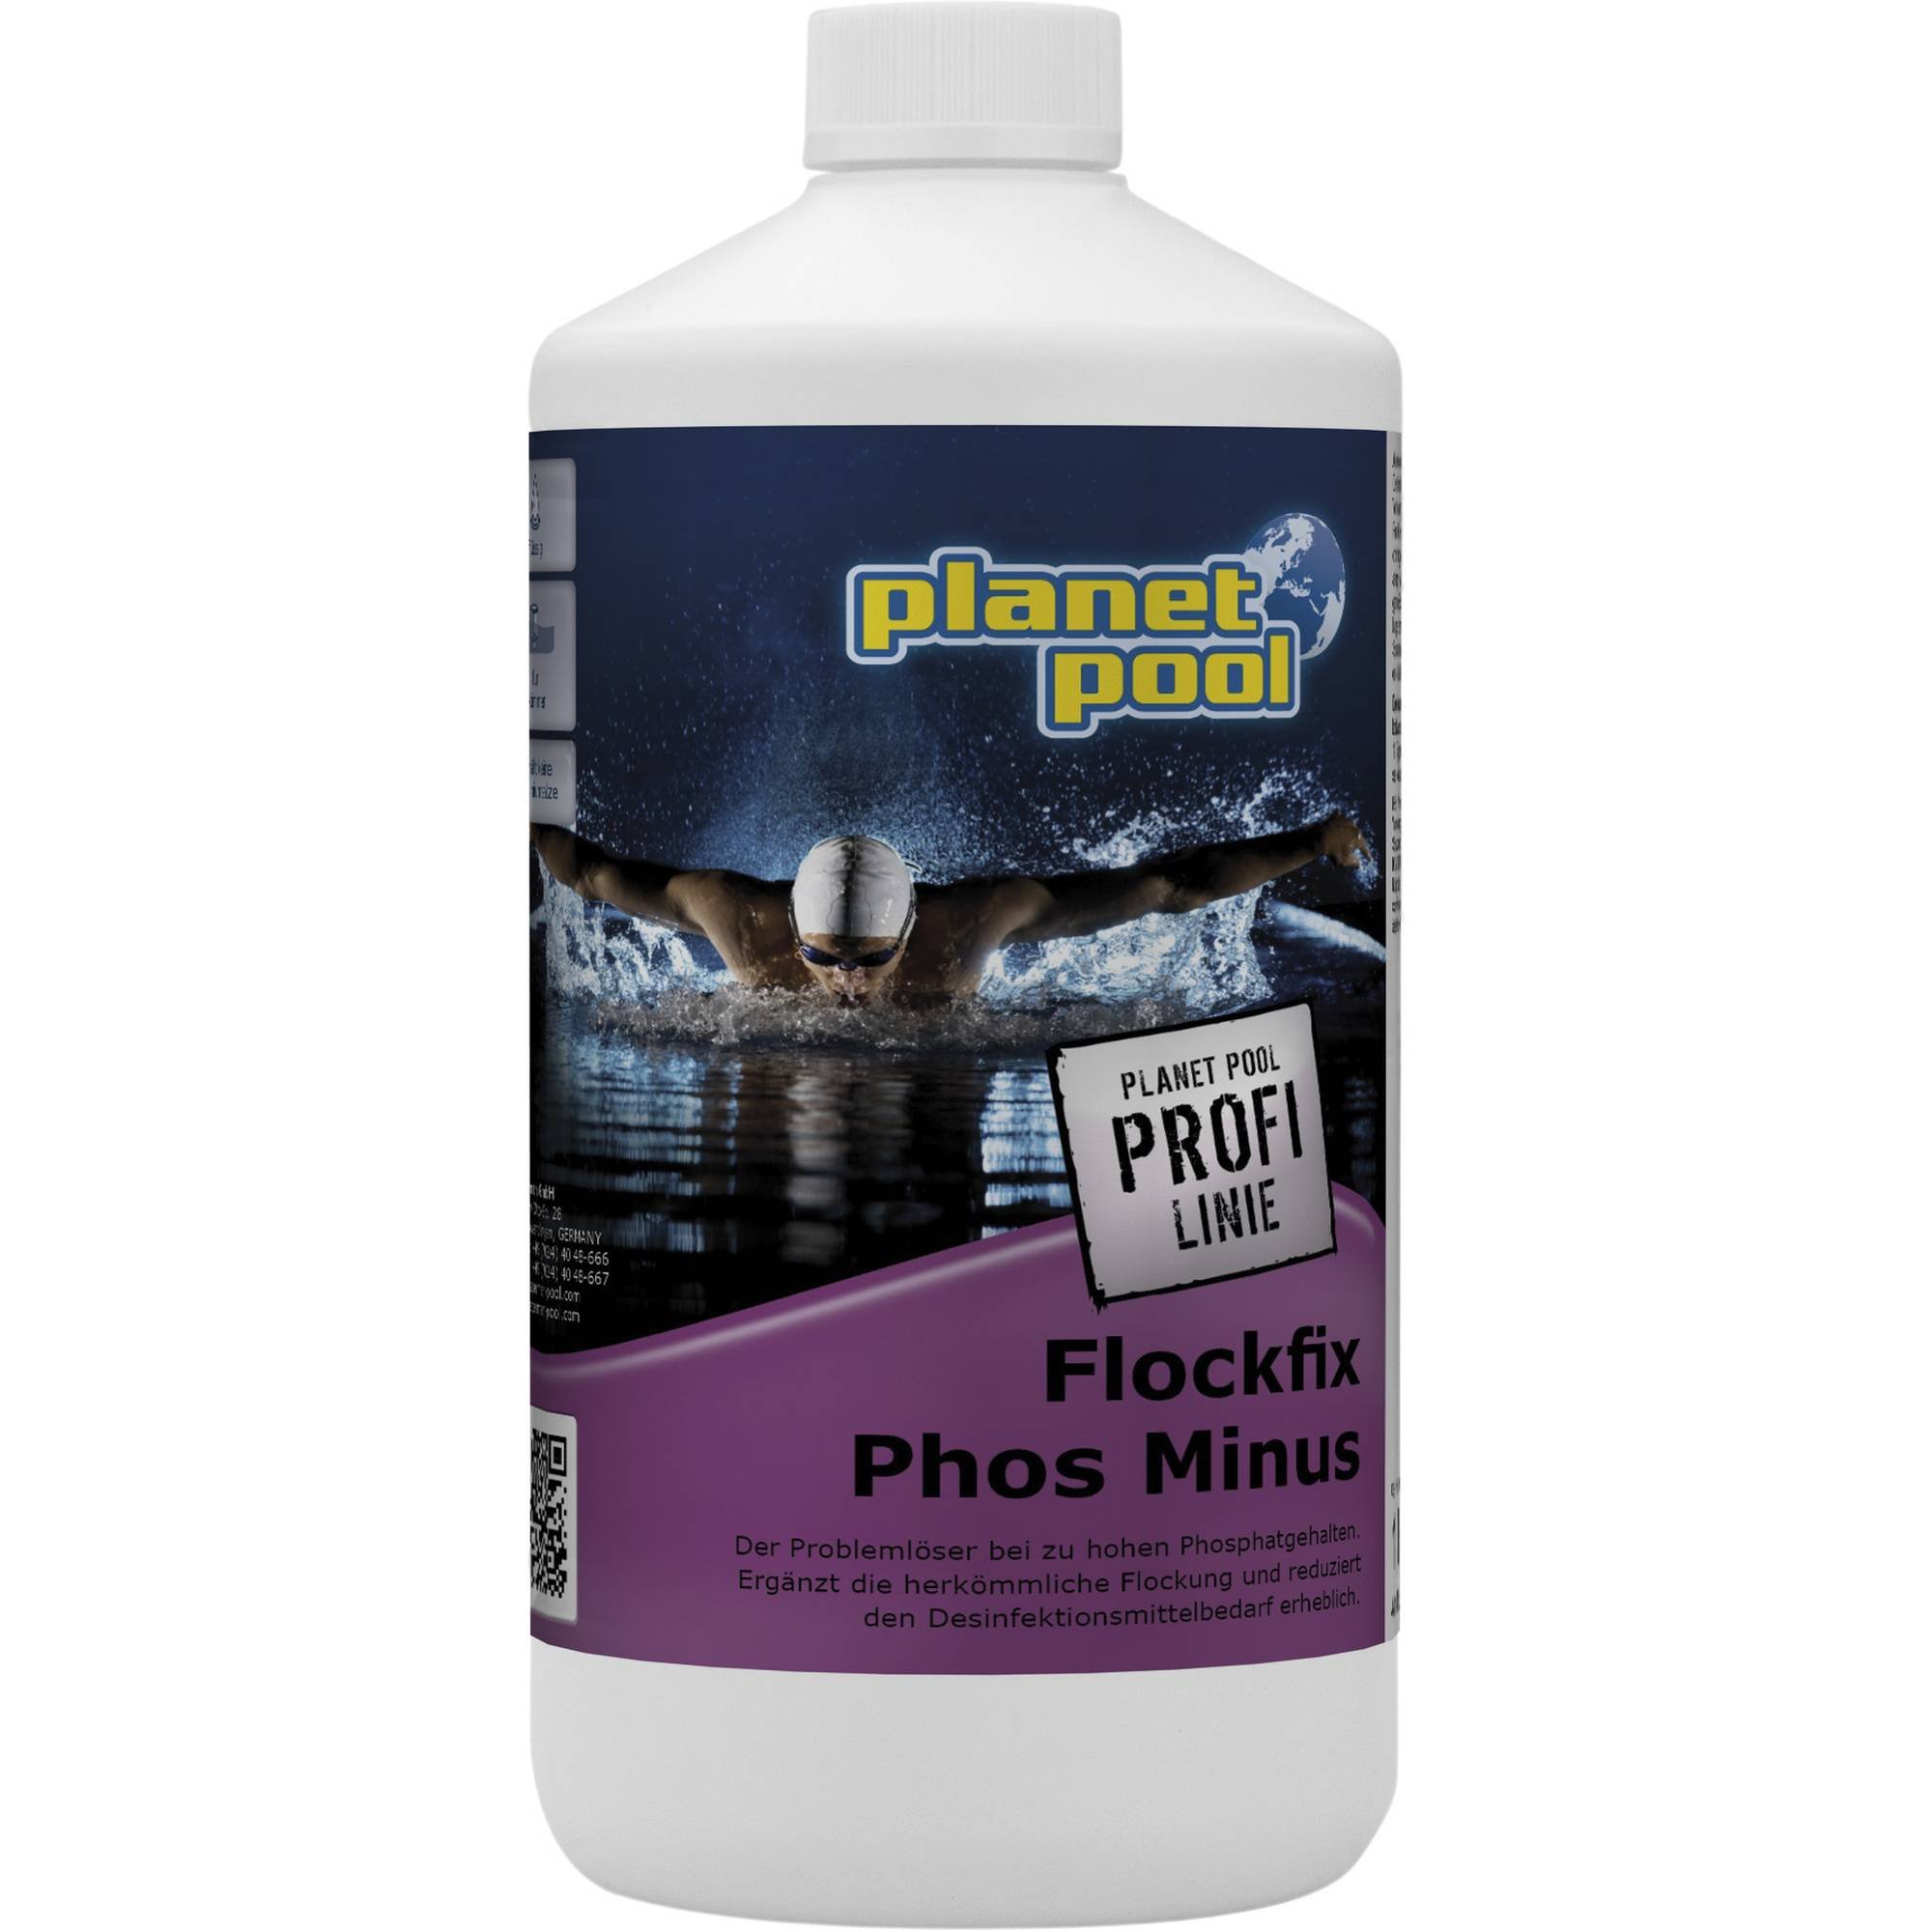 PLANET POOL - Profi Linie | Flockfix Phos Minus 1 Liter